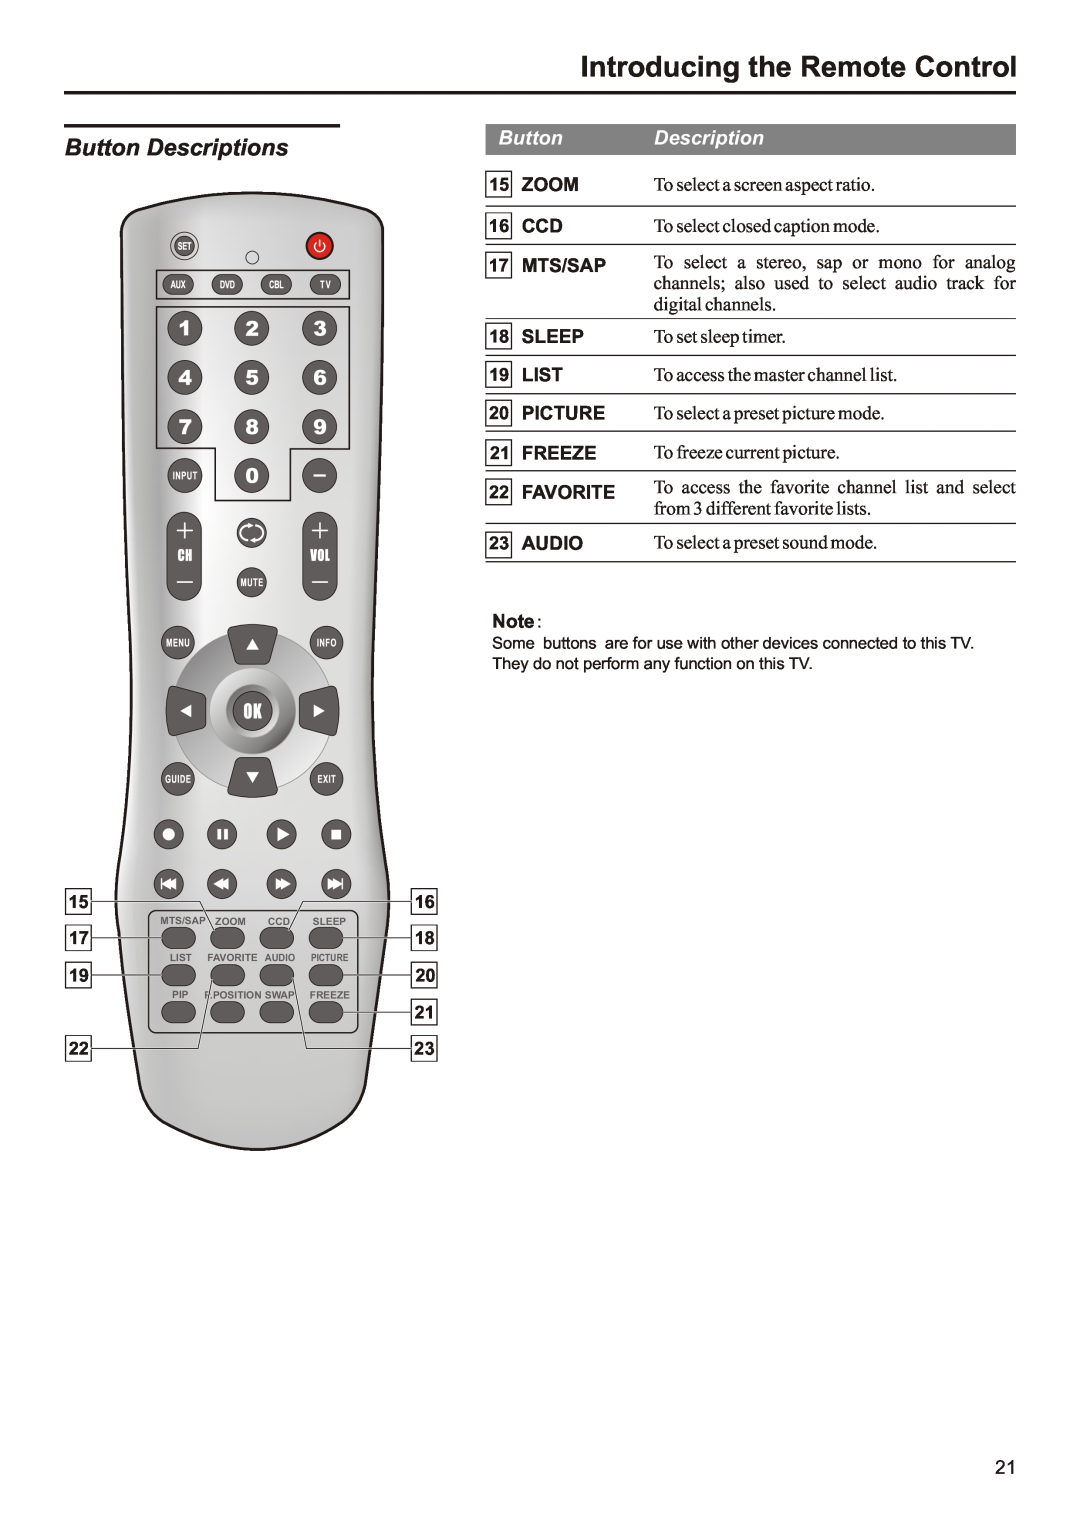 Audiovox FPE3207 Introducing the Remote Control, Button Descriptions, Zoom, Mts/Sap, Sleep, List, Picture, Freeze, Audio 